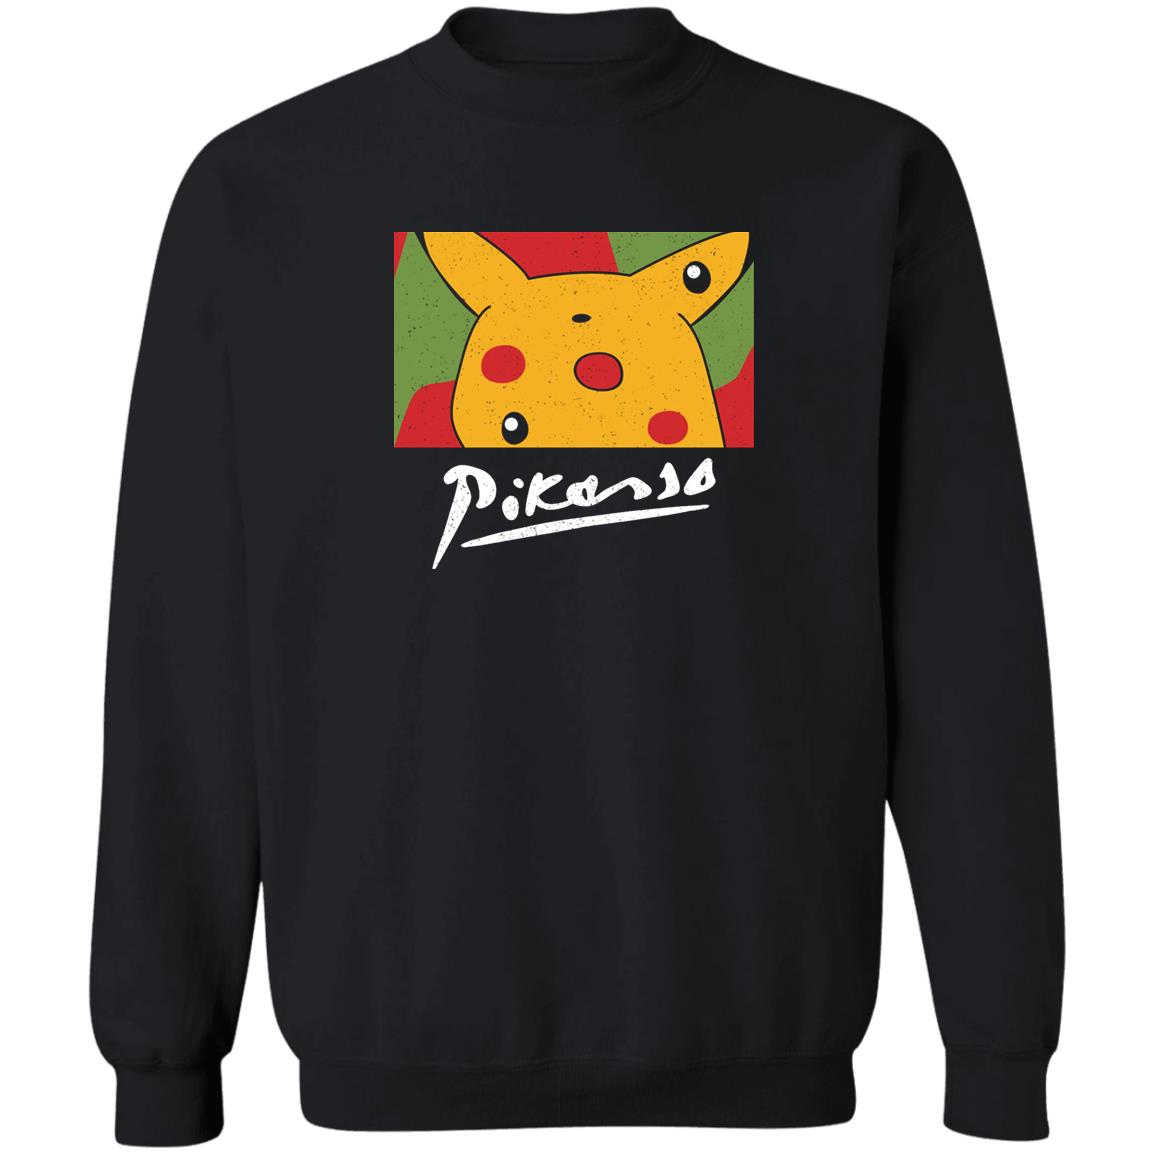 Pikachu Pikasso Shirt 2